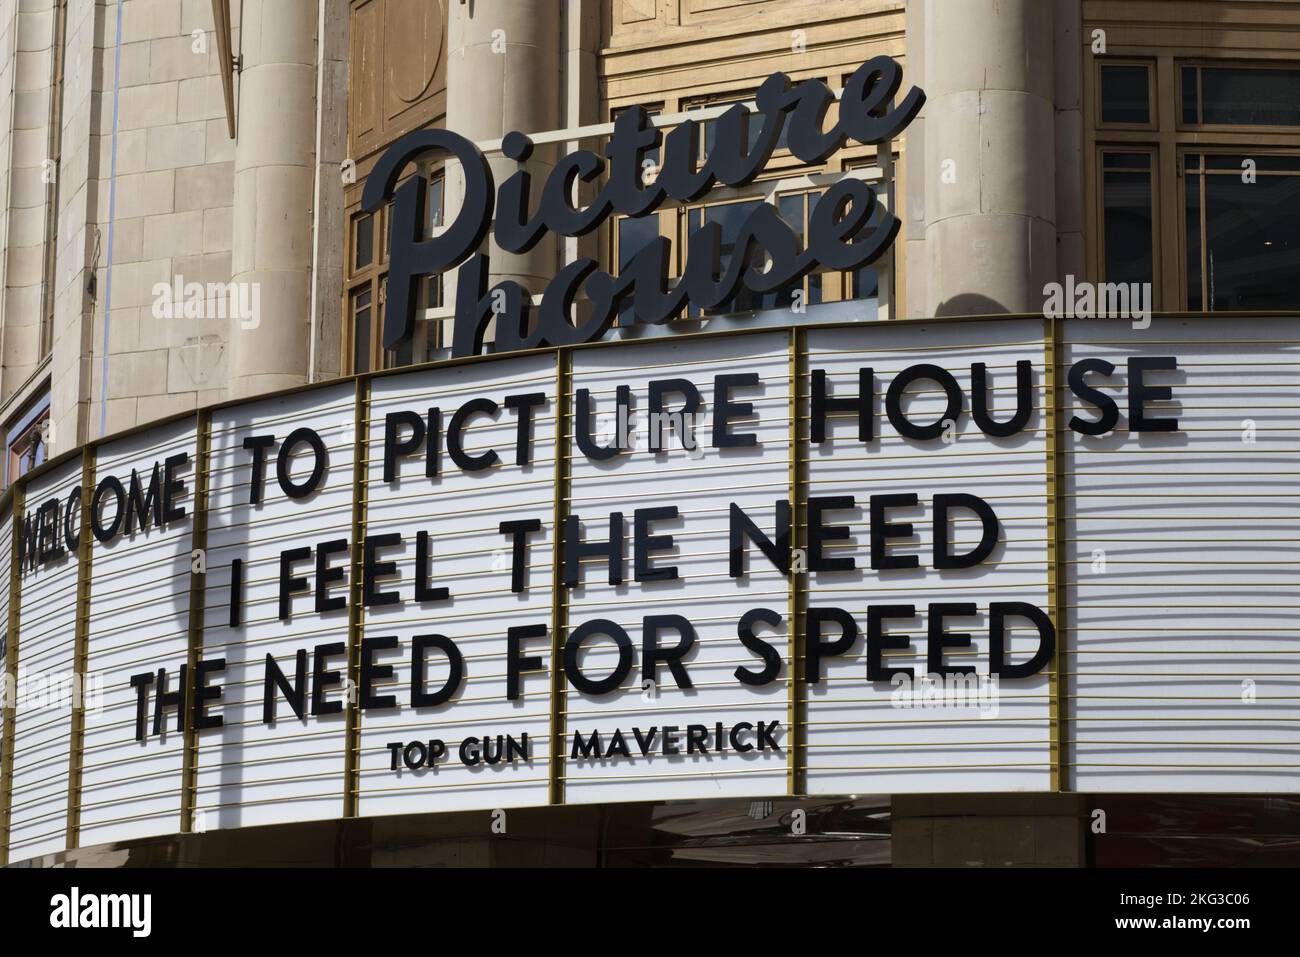 Picture house, Fulham, advertising the  top gun movie maverick Stock Photo